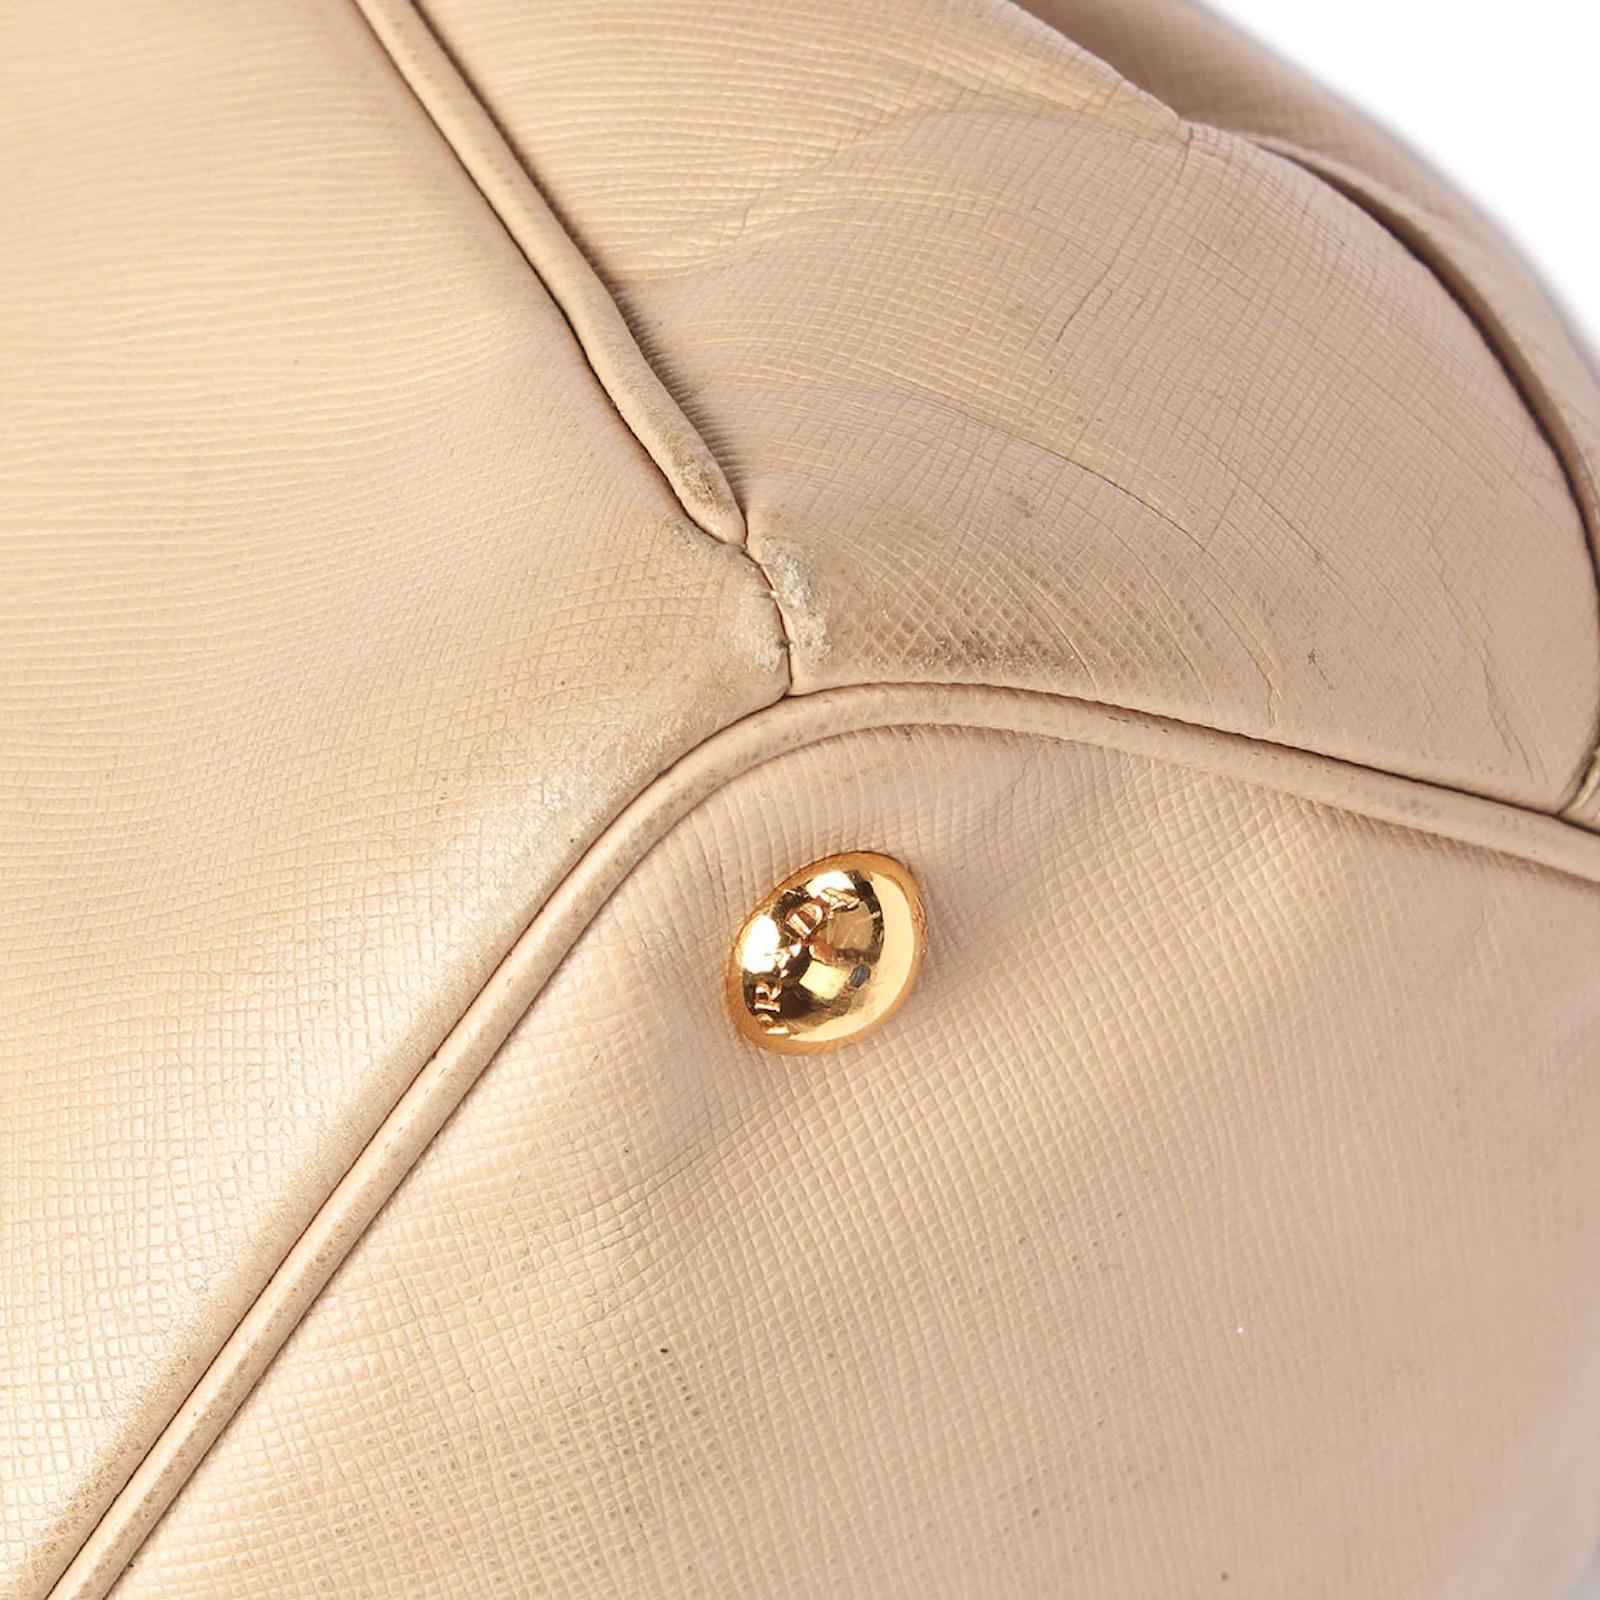 Prada Saffiano Galleria lined Zip Bag Beige Leather Pony-style